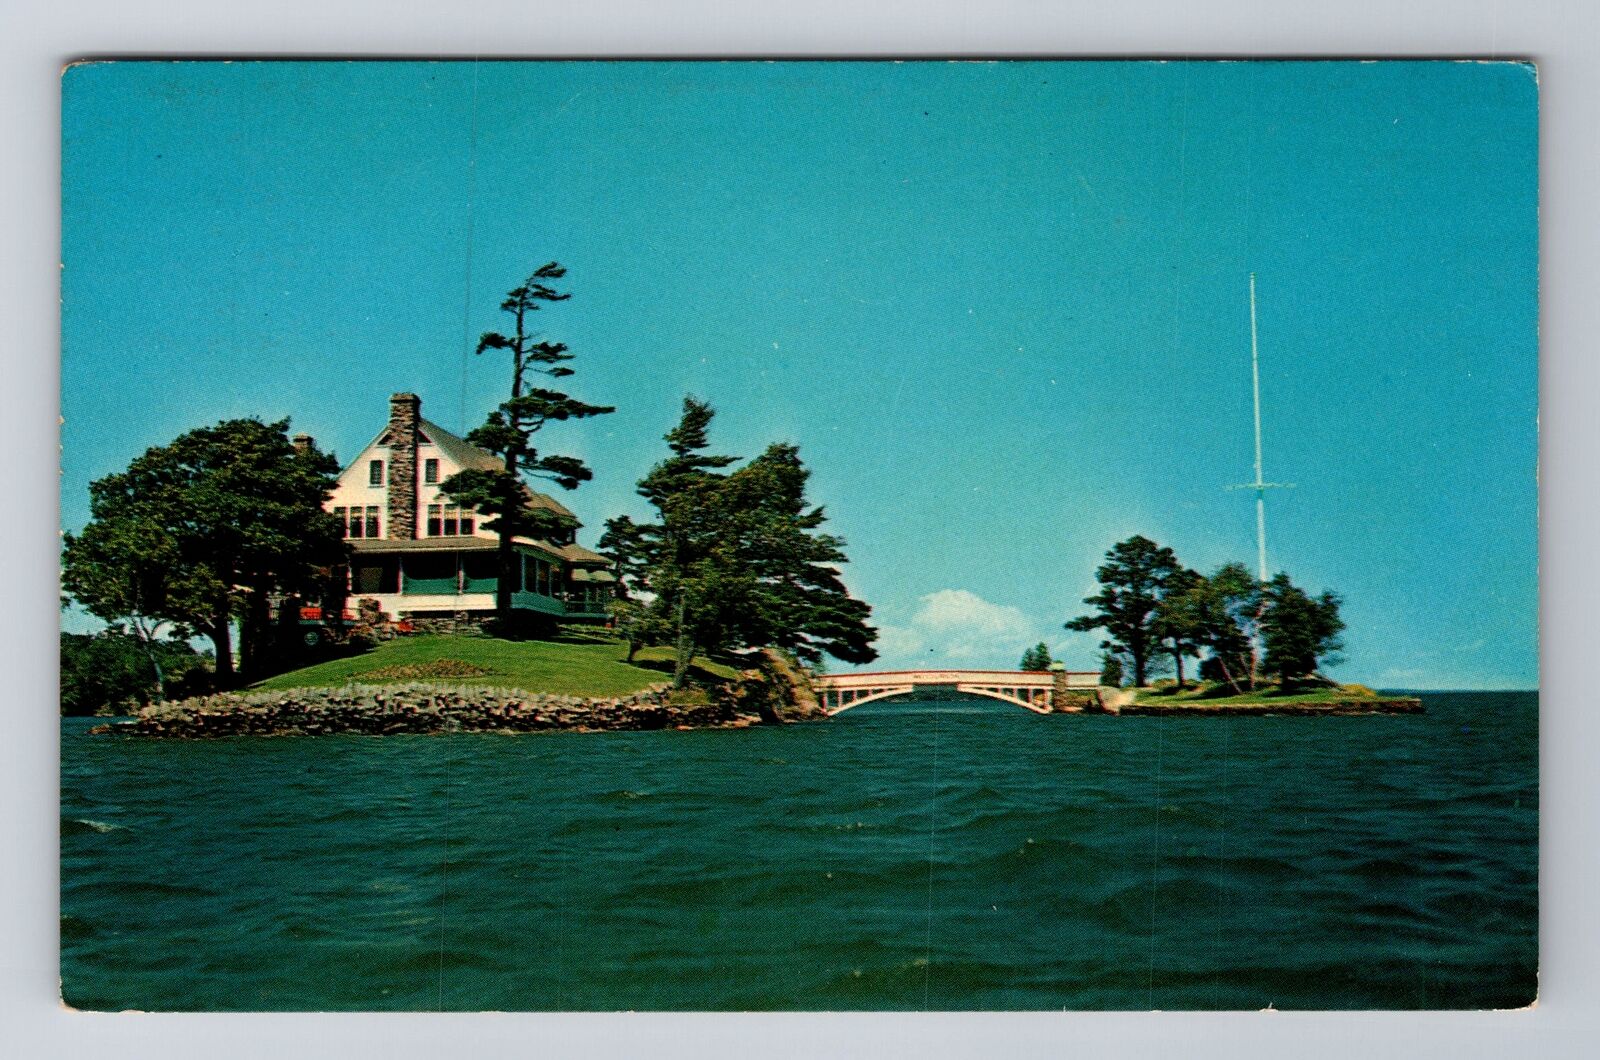 Zavikon Island NY-New York, Intl. Bridge, St Lawrence River, Vintage Postcard